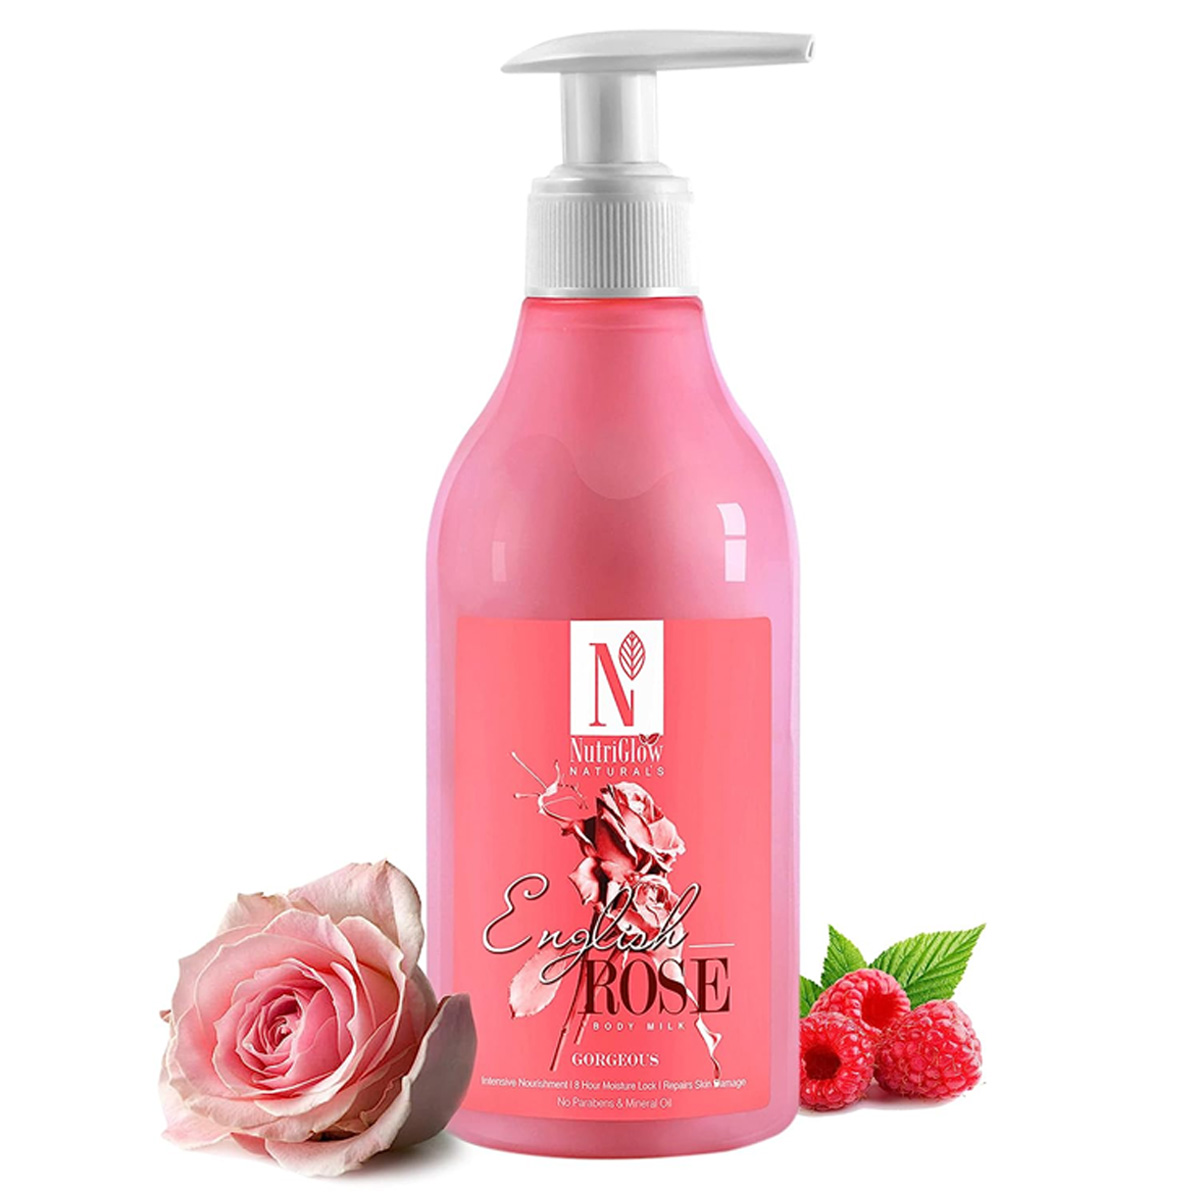 Nutriglow Natural's English Rose Body Milk, 300ml